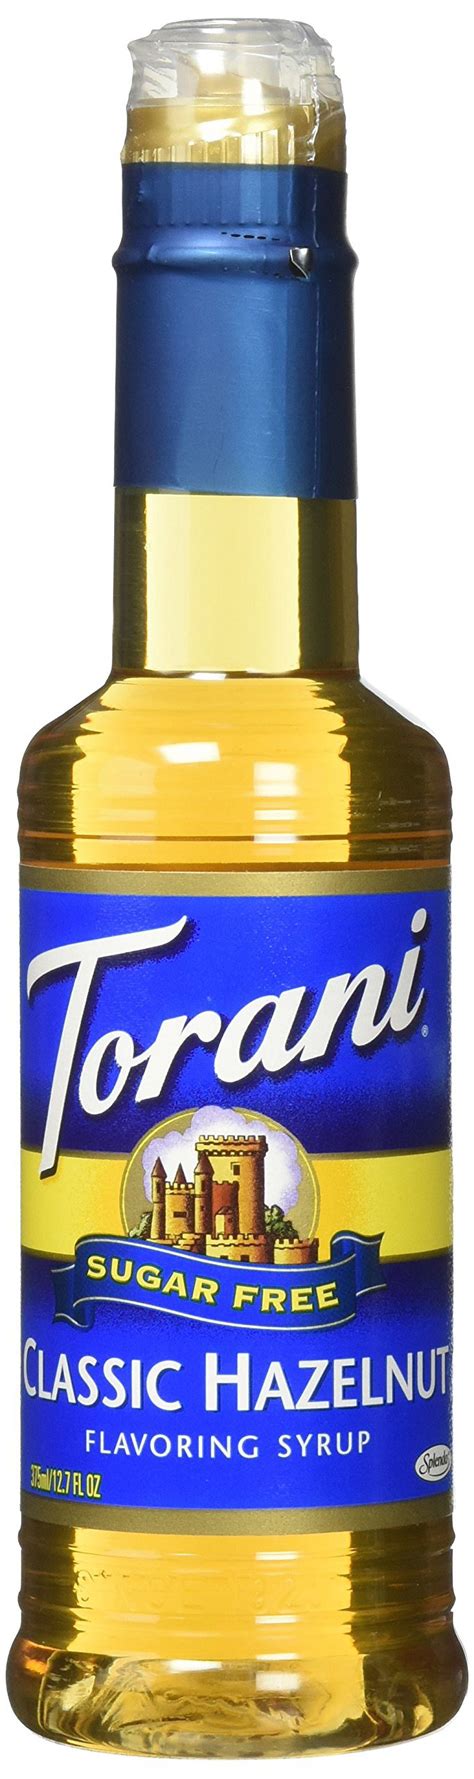 Torani Sugar Free Classic Hazelnut Syrup 12 7 Oz Walmart Com